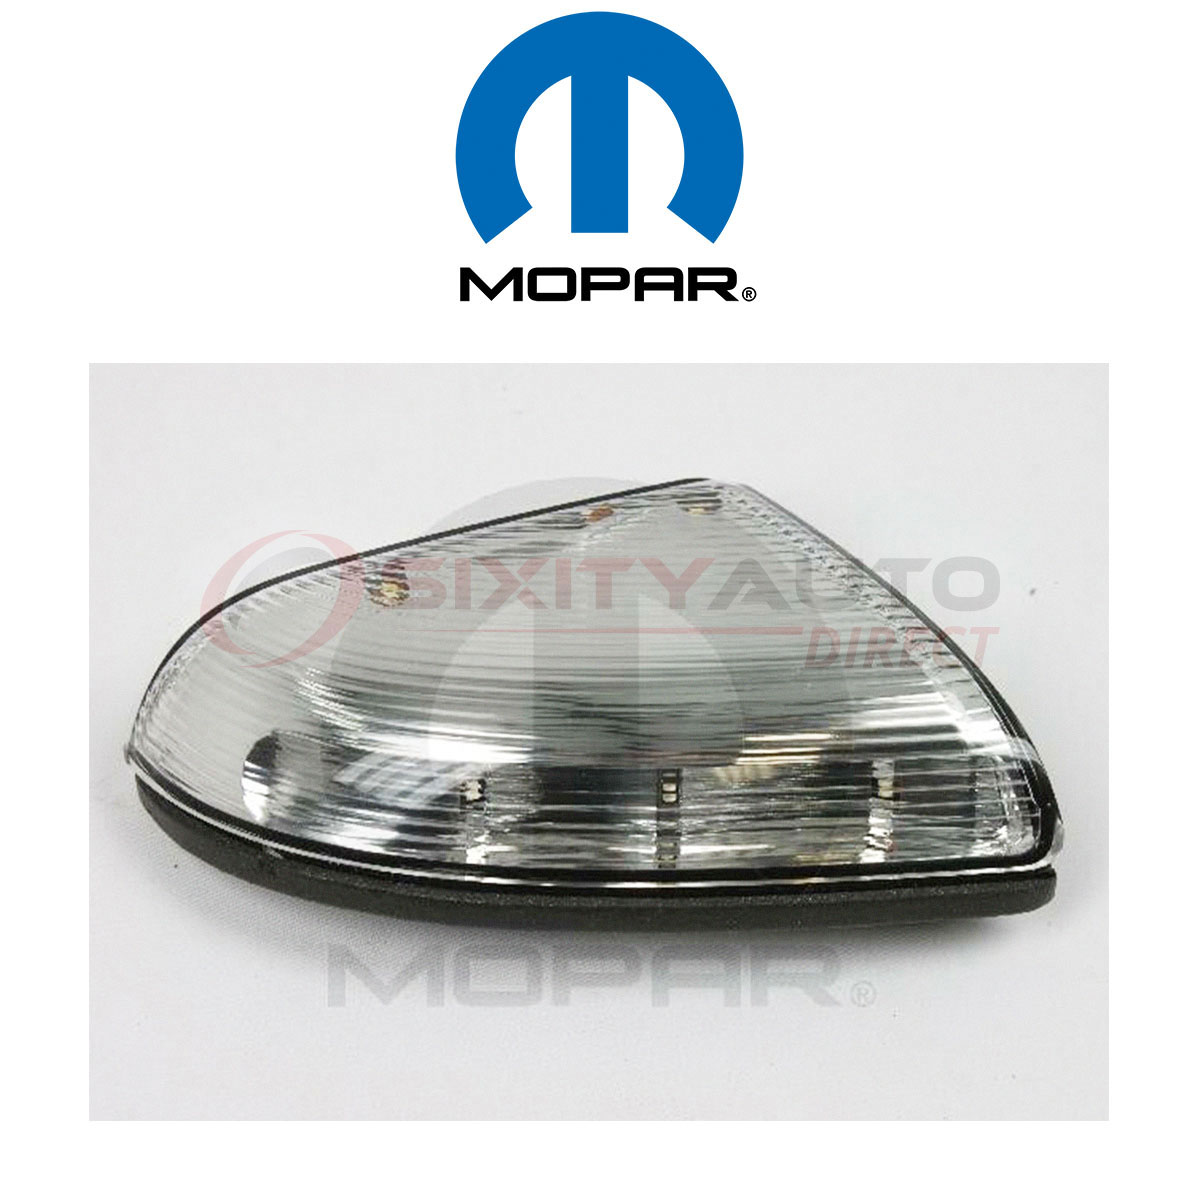 Mopar Turn Signal Light for 2011-2013 Ram 1500 3.6L 3.7L 4.7L 5.7L V6 V8 - vf | eBay 2011 Ram 1500 Front Turn Signal Bulb